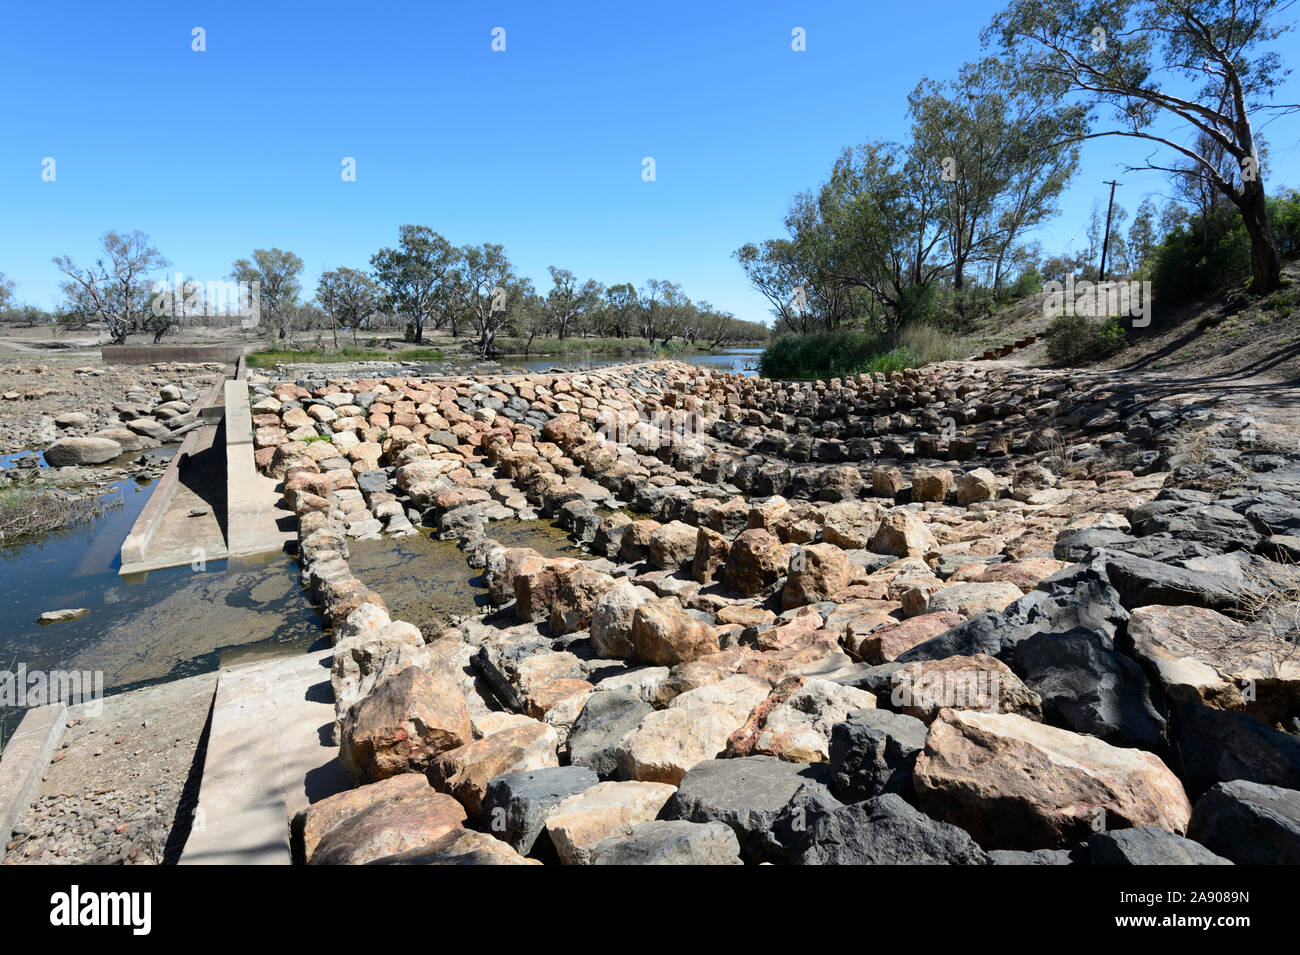 https://c8.alamy.com/comp/2A9089N/brewarrina-weir-on-the-barwon-river-has-a-fish-ladder-made-of-rocks-to-assist-fish-upstream-of-the-weir-brewarrina-new-south-wales-nsw-australia-2A9089N.jpg